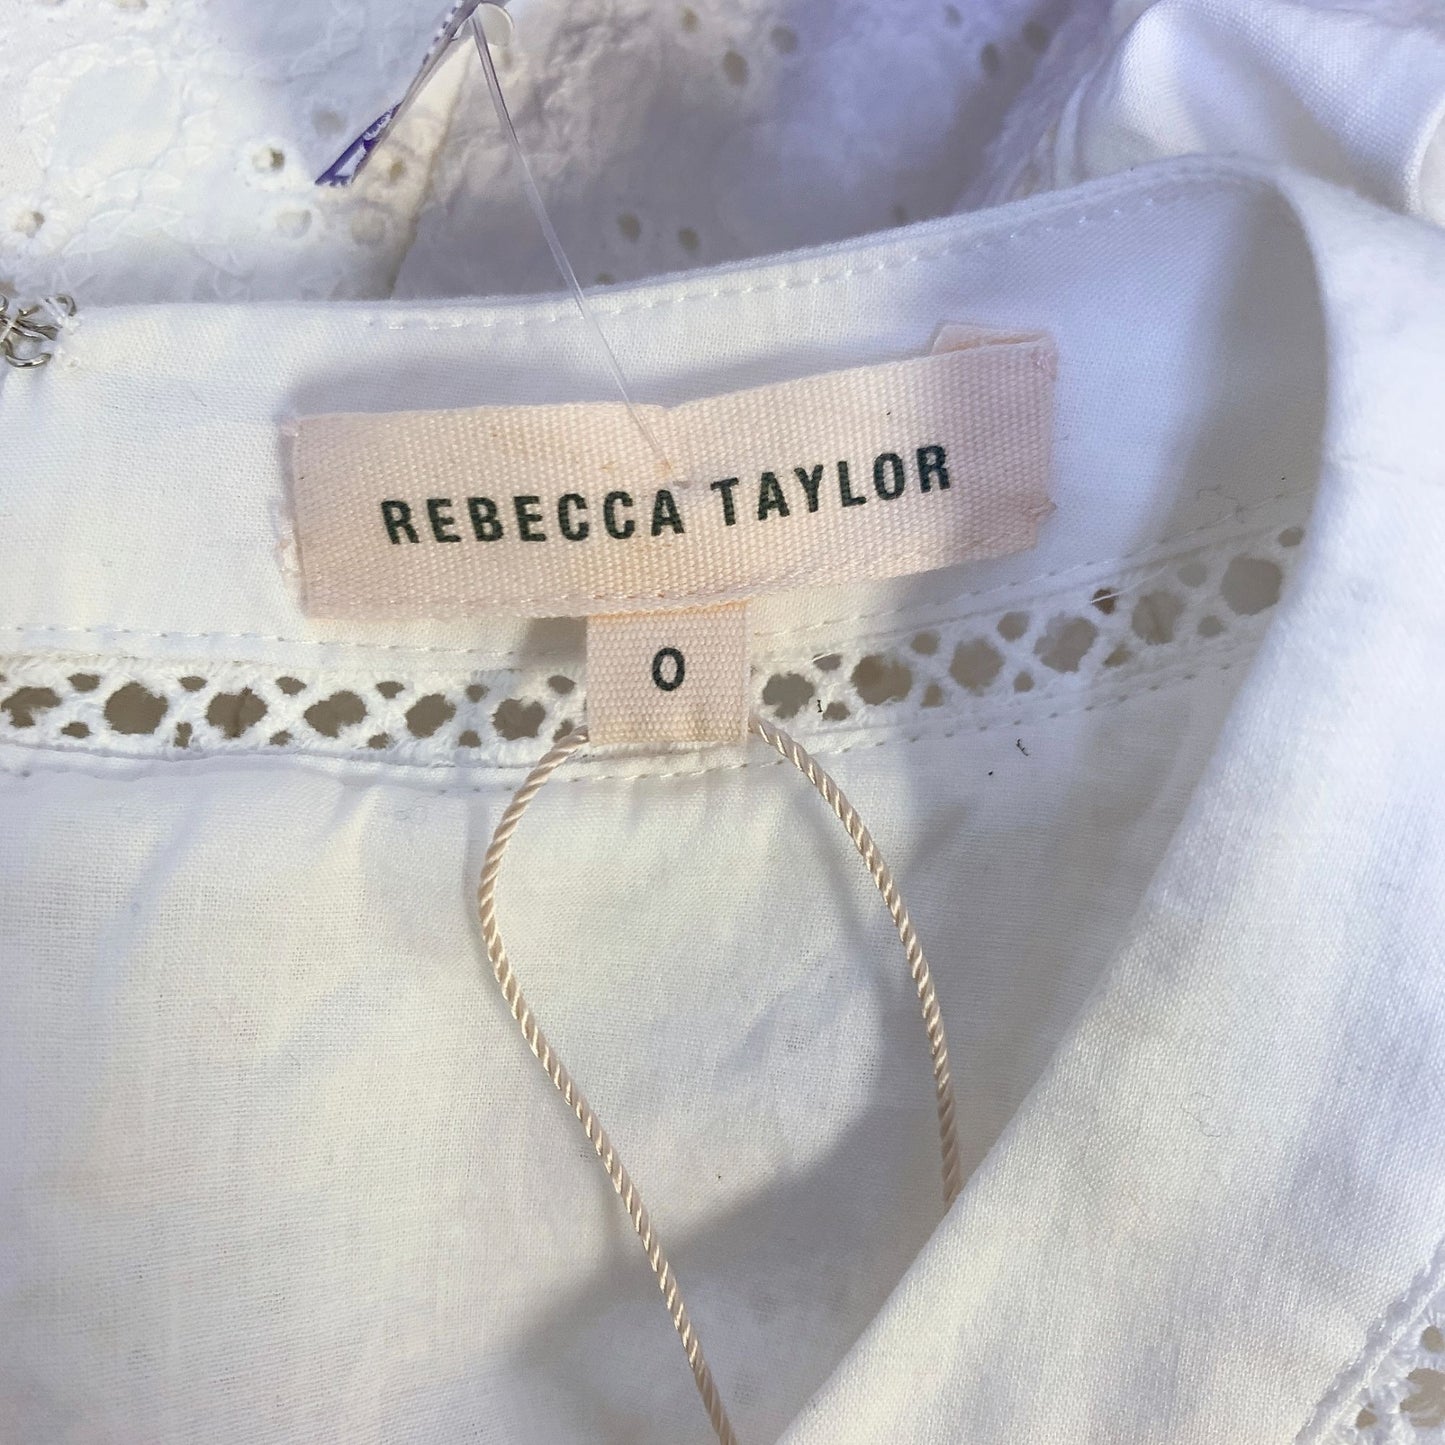 *NWT Rebecca Taylor White Eyelet Dress Size 0